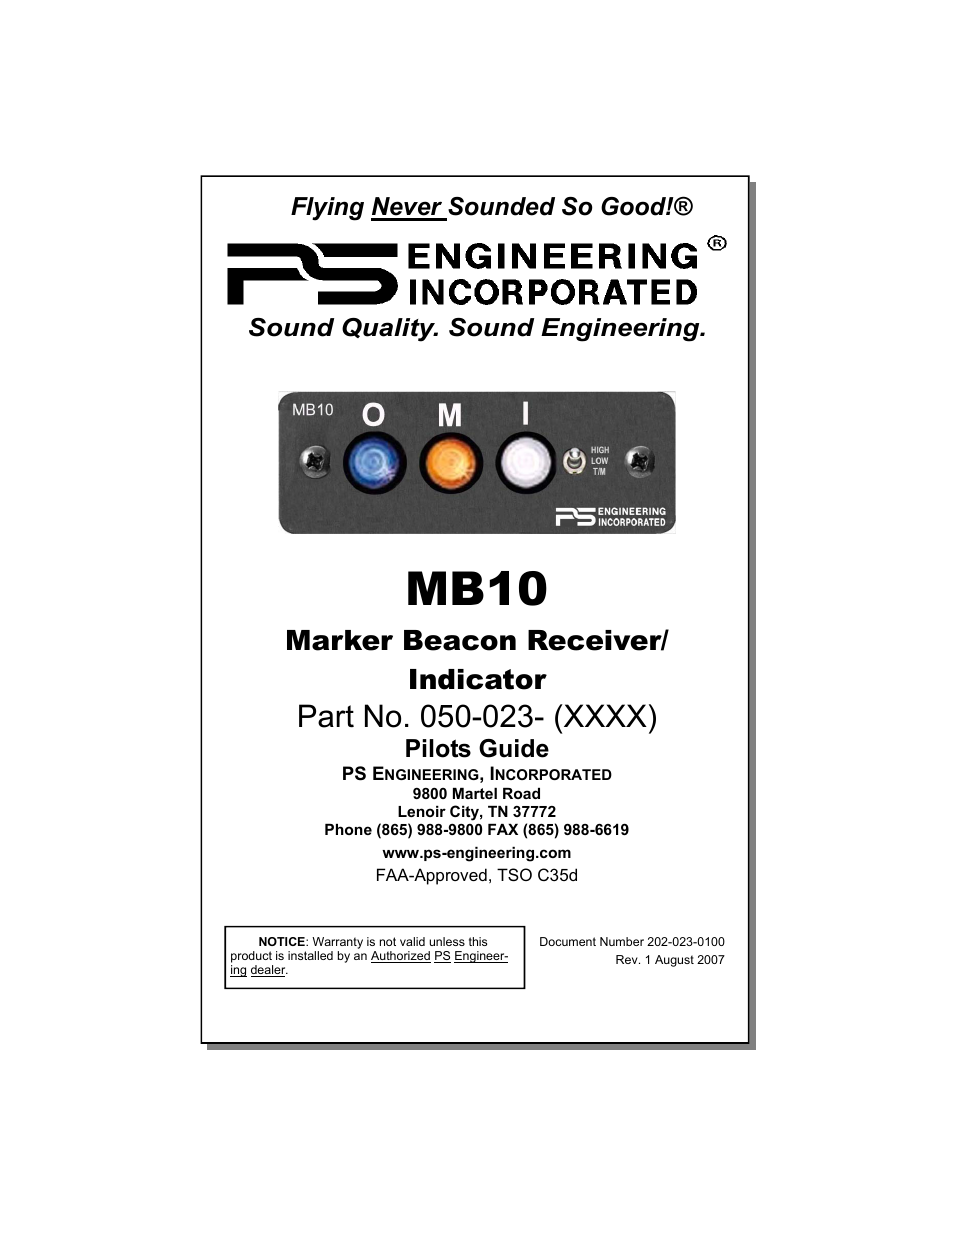 MB-10 Pilot’s Guide